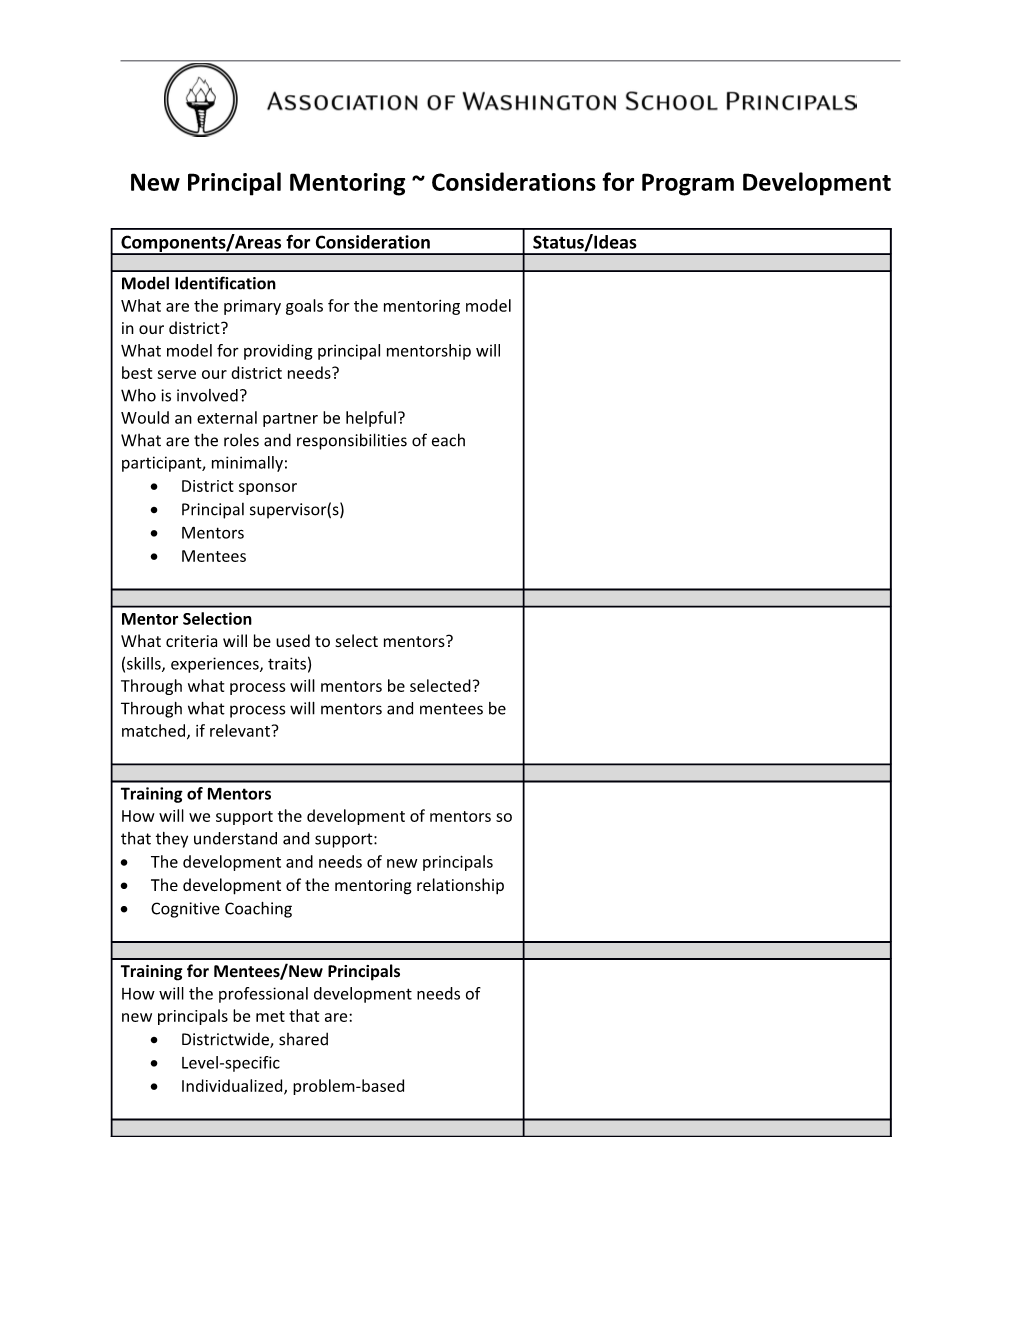 New Principal Mentoring Considerations for Program Development